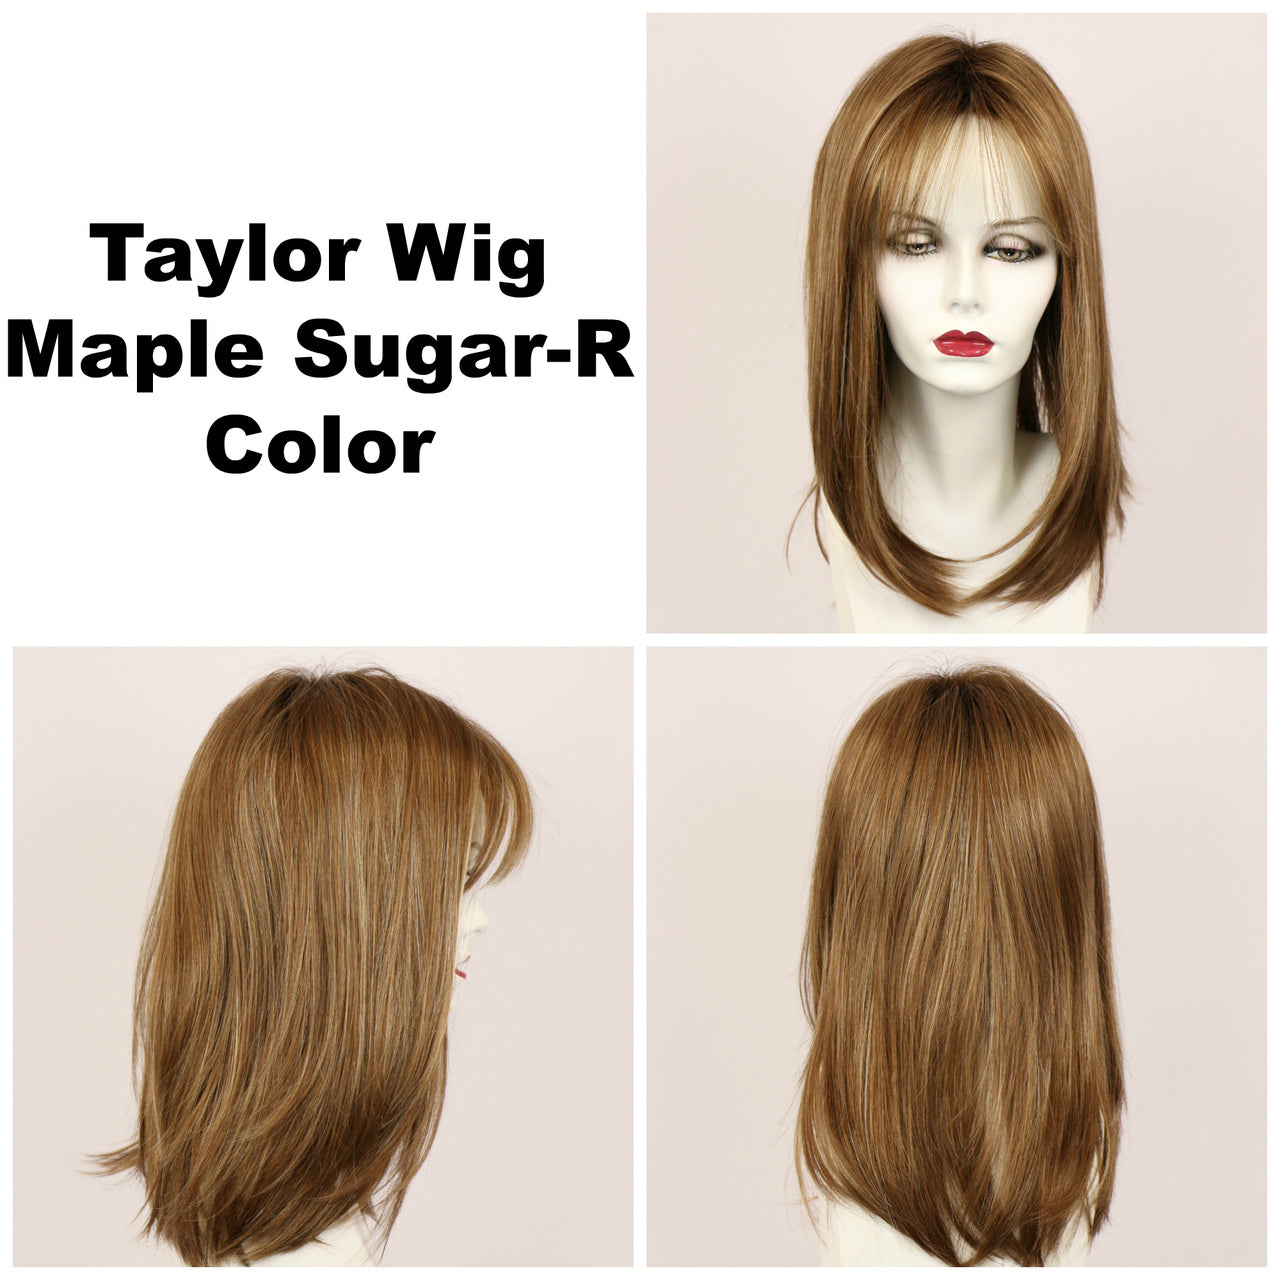 Maple Sugar-R / Taylor w/ Roots / Long Wig